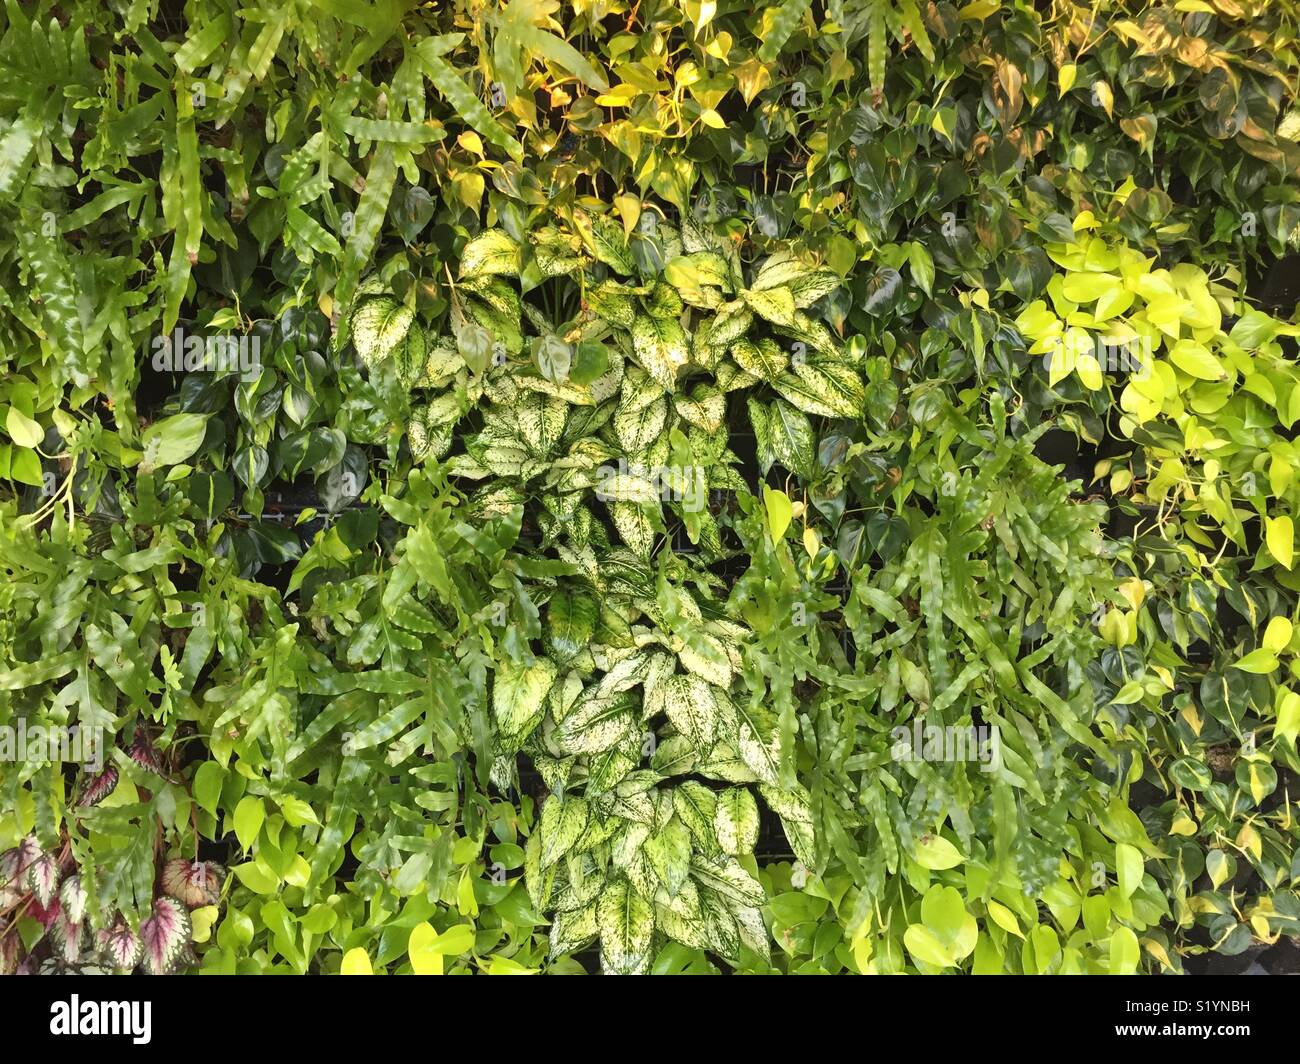 Living Green Wall In Naturlichen Pflanzen Blatter Abgedeckt